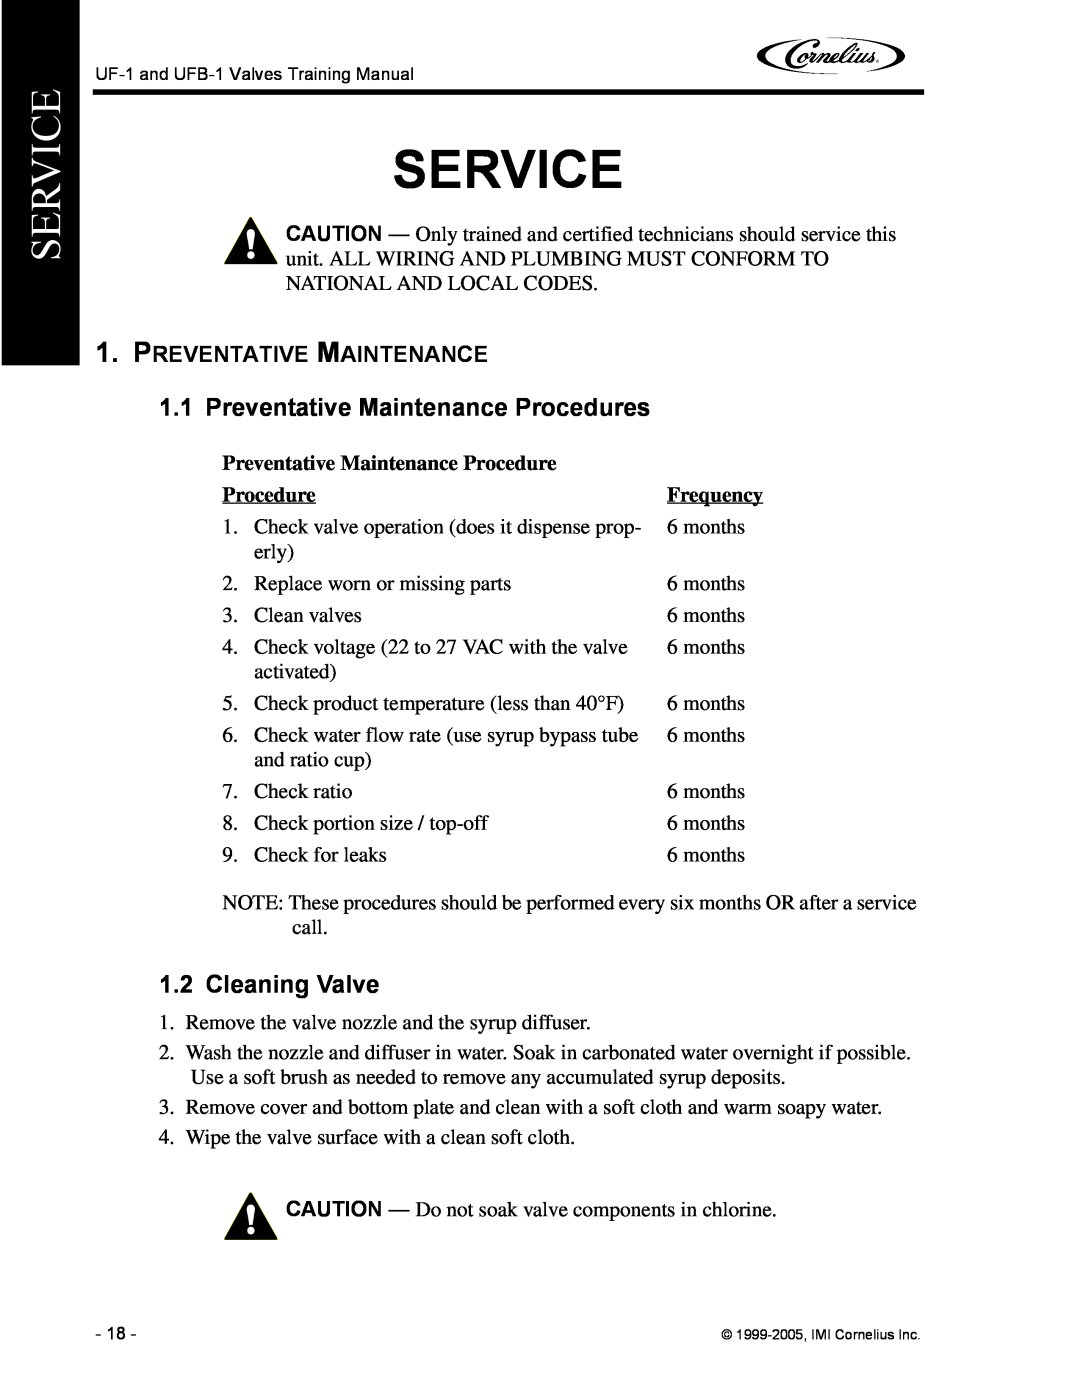 Cornelius UFB-1, UF-1 manual Service, 1.1Preventative Maintenance Procedures, Cleaning Valve 